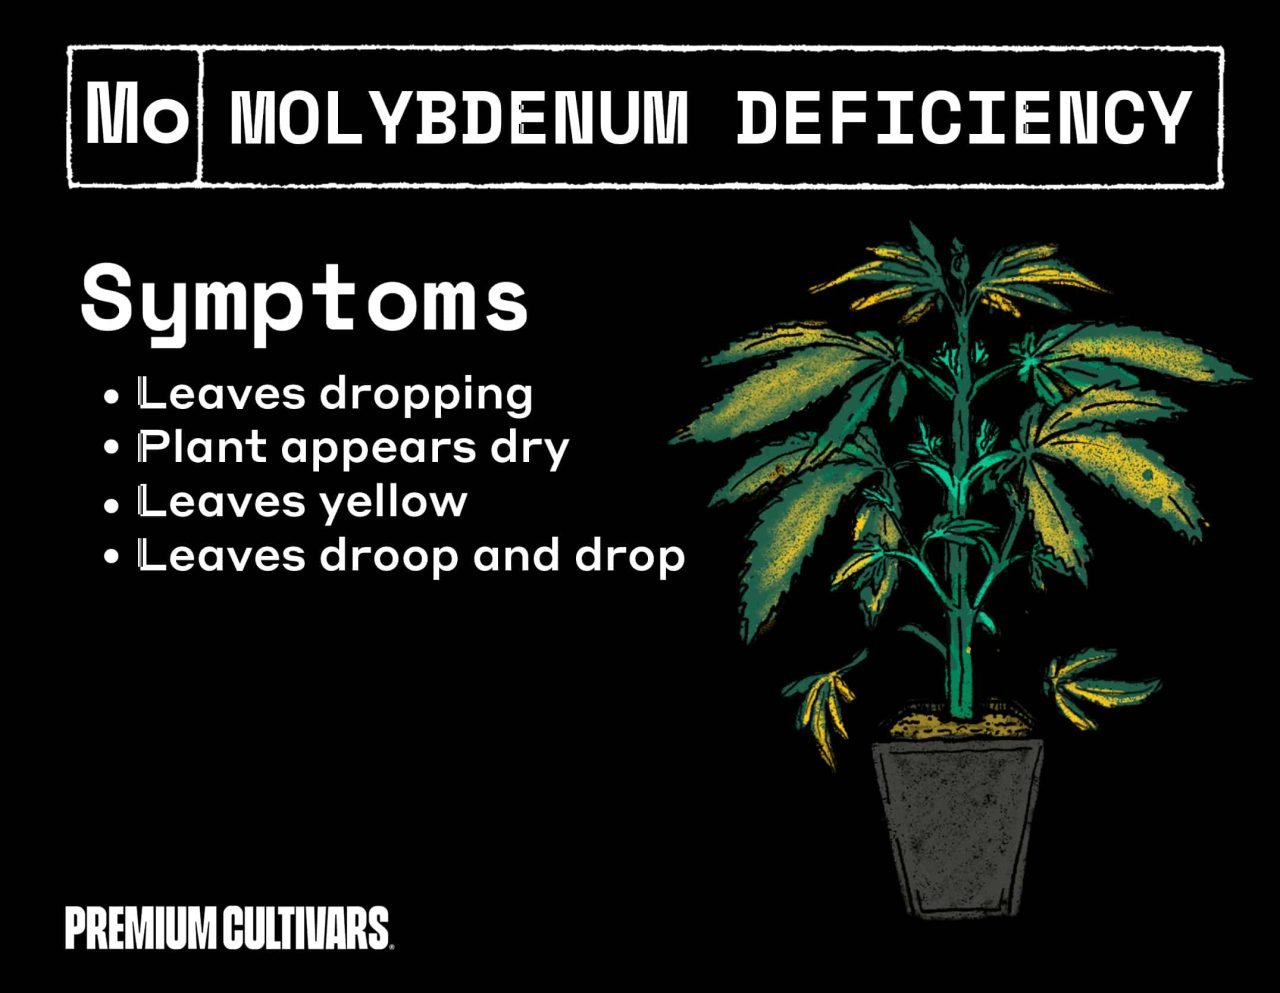 Molybdenum deficiency symptoms in a cannabis plant